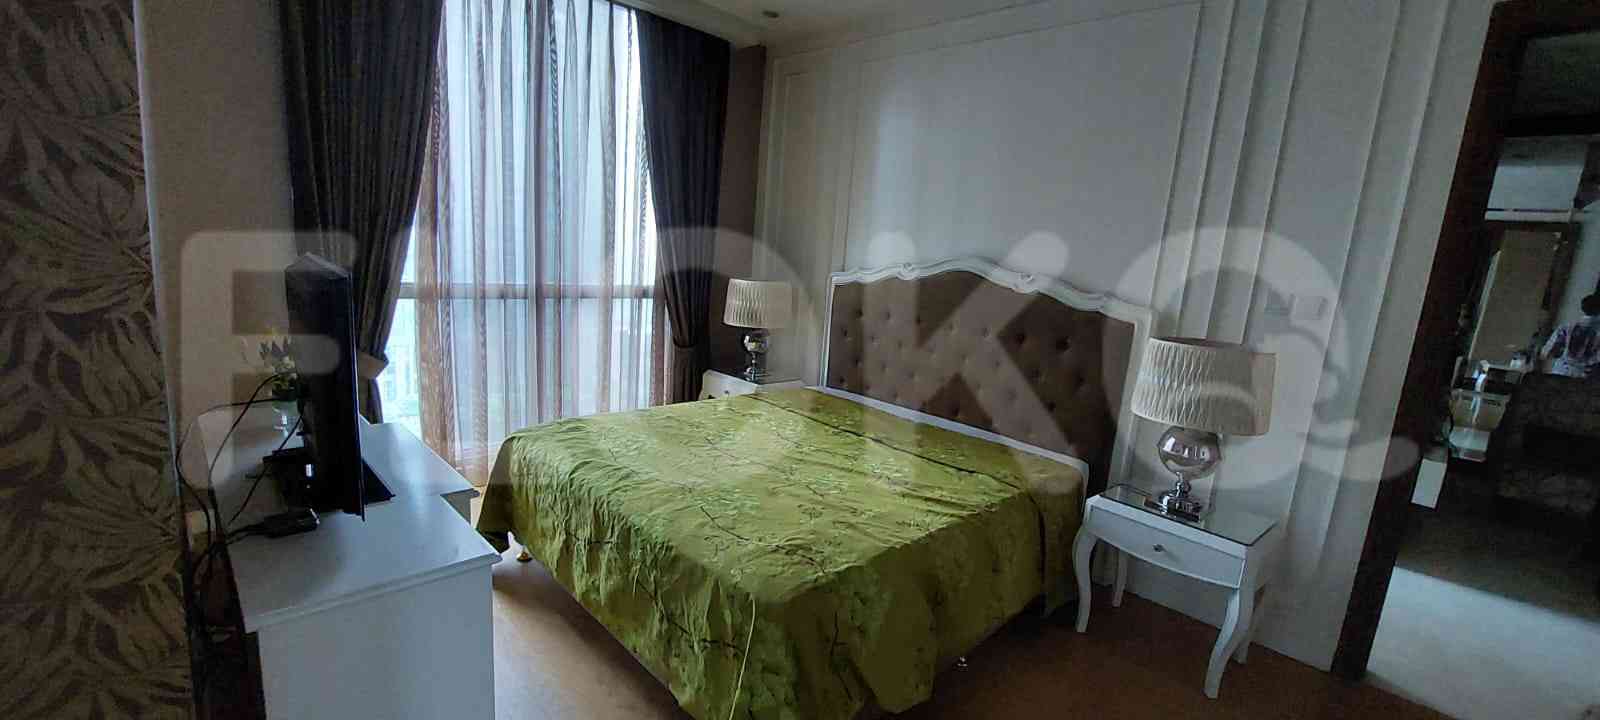 2 Bedroom on 19th Floor for Rent in Kemang Village Residence - fkeb83 2